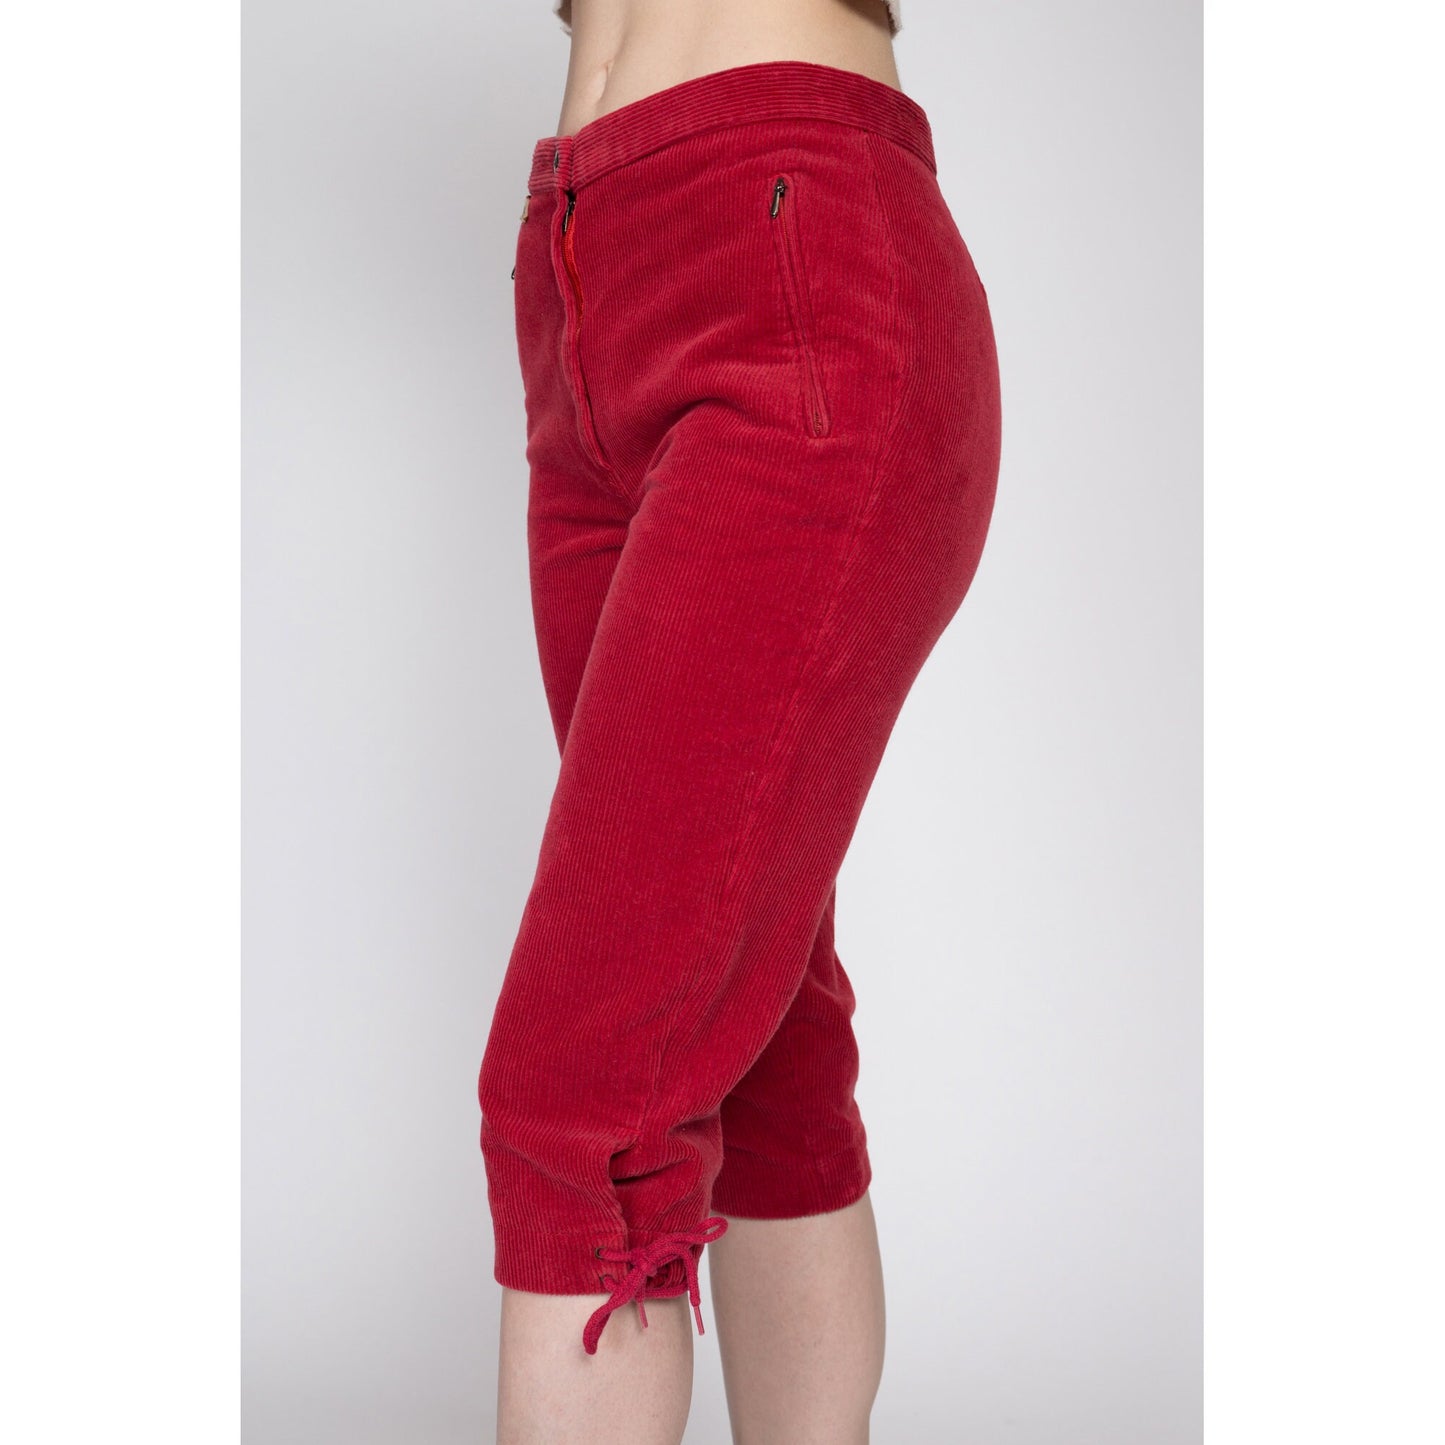 1950s Red Corduroy Capri Pants  xs/small – Birthday Life Vintage